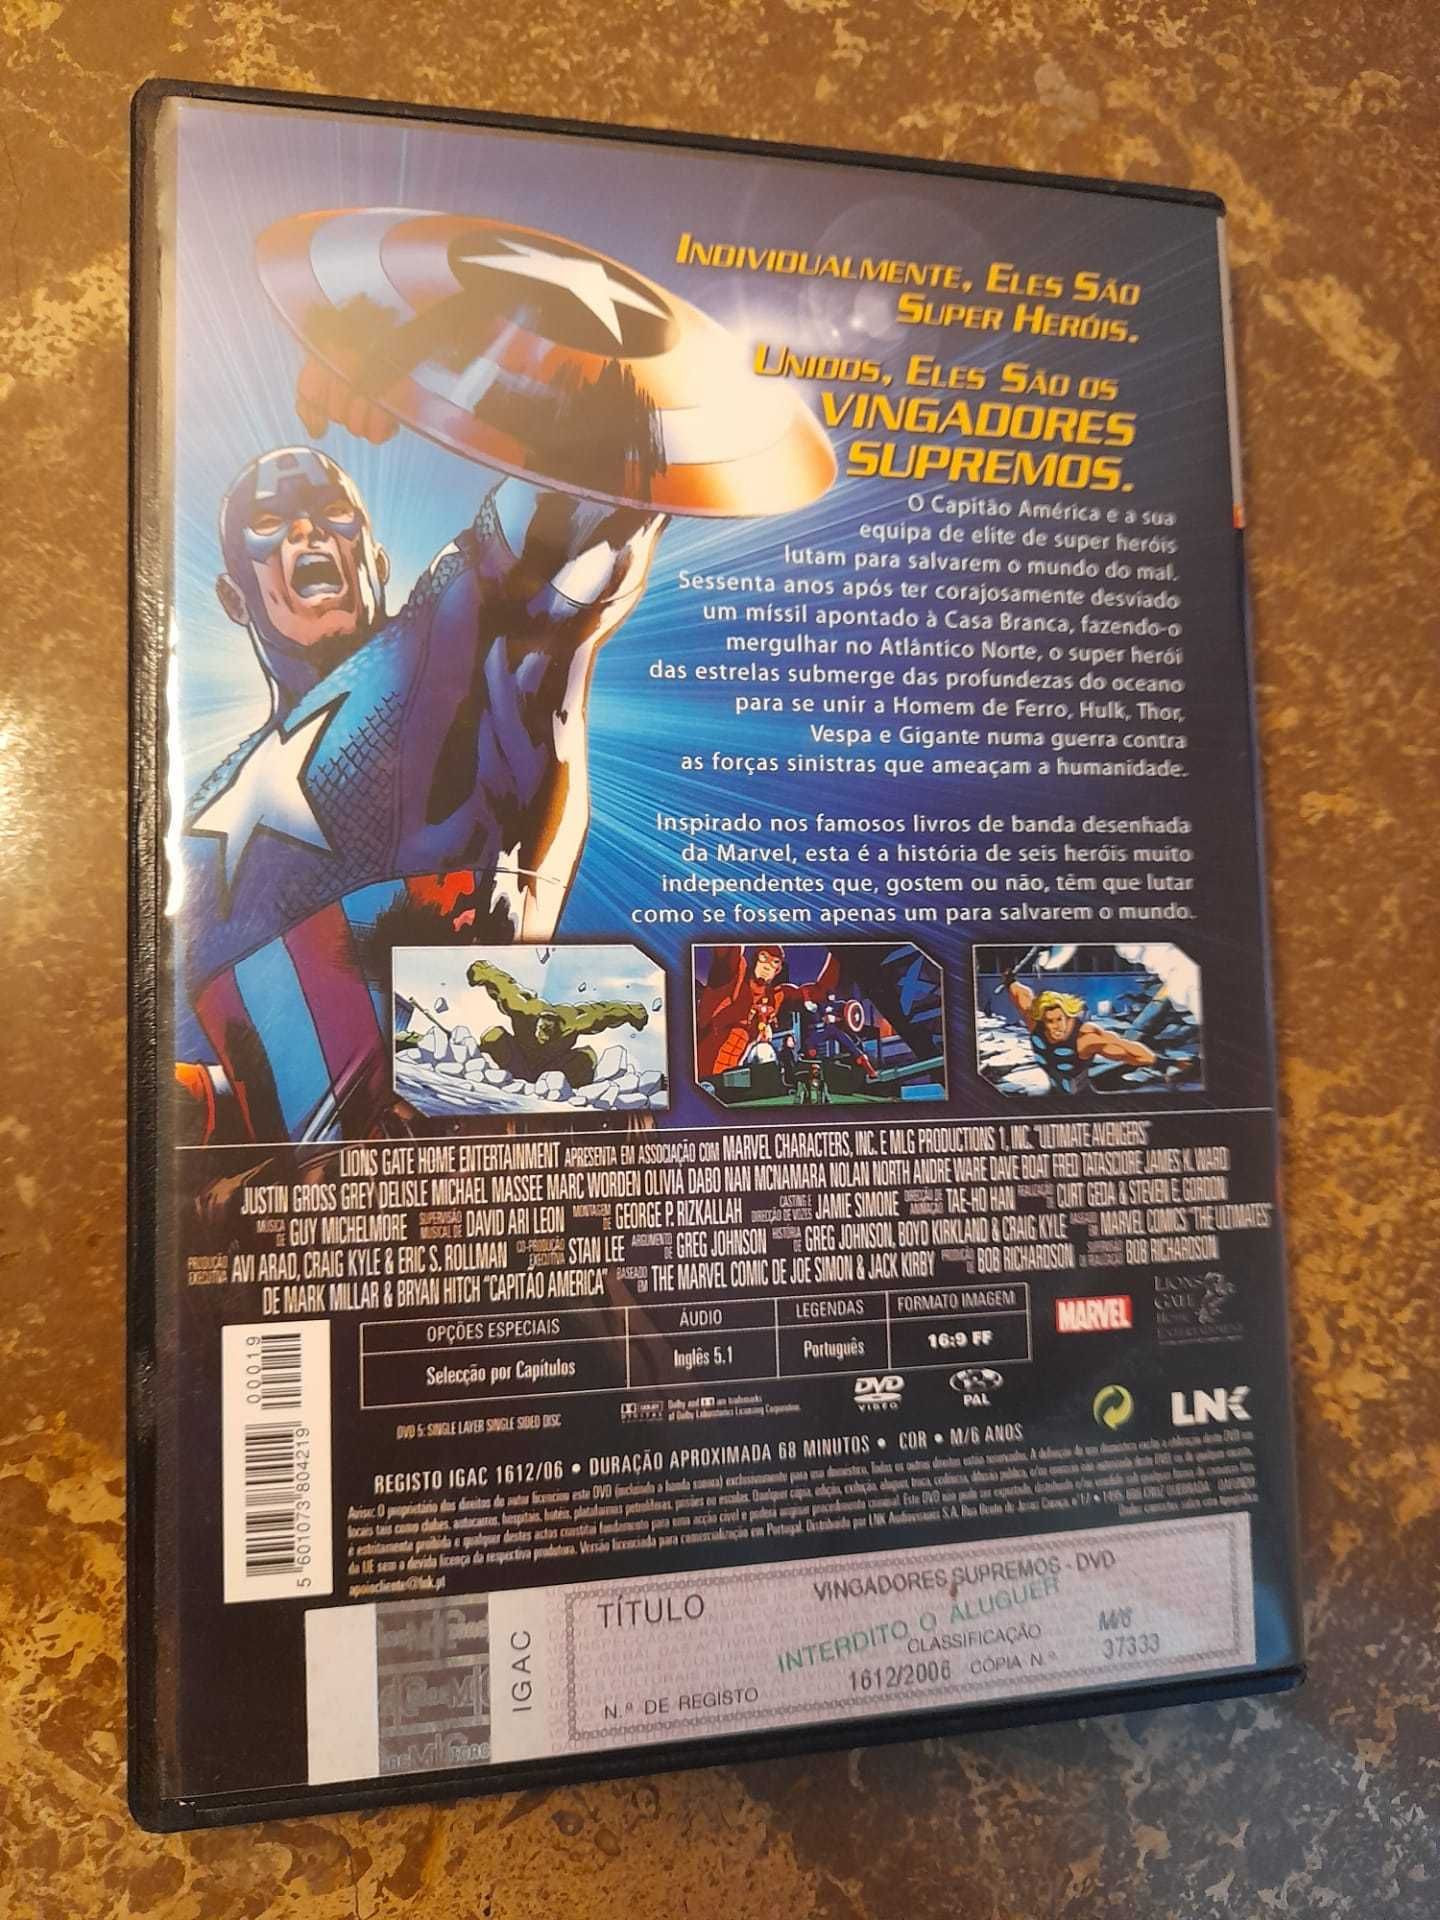 DVD "Vingadores Supremos", Avengers